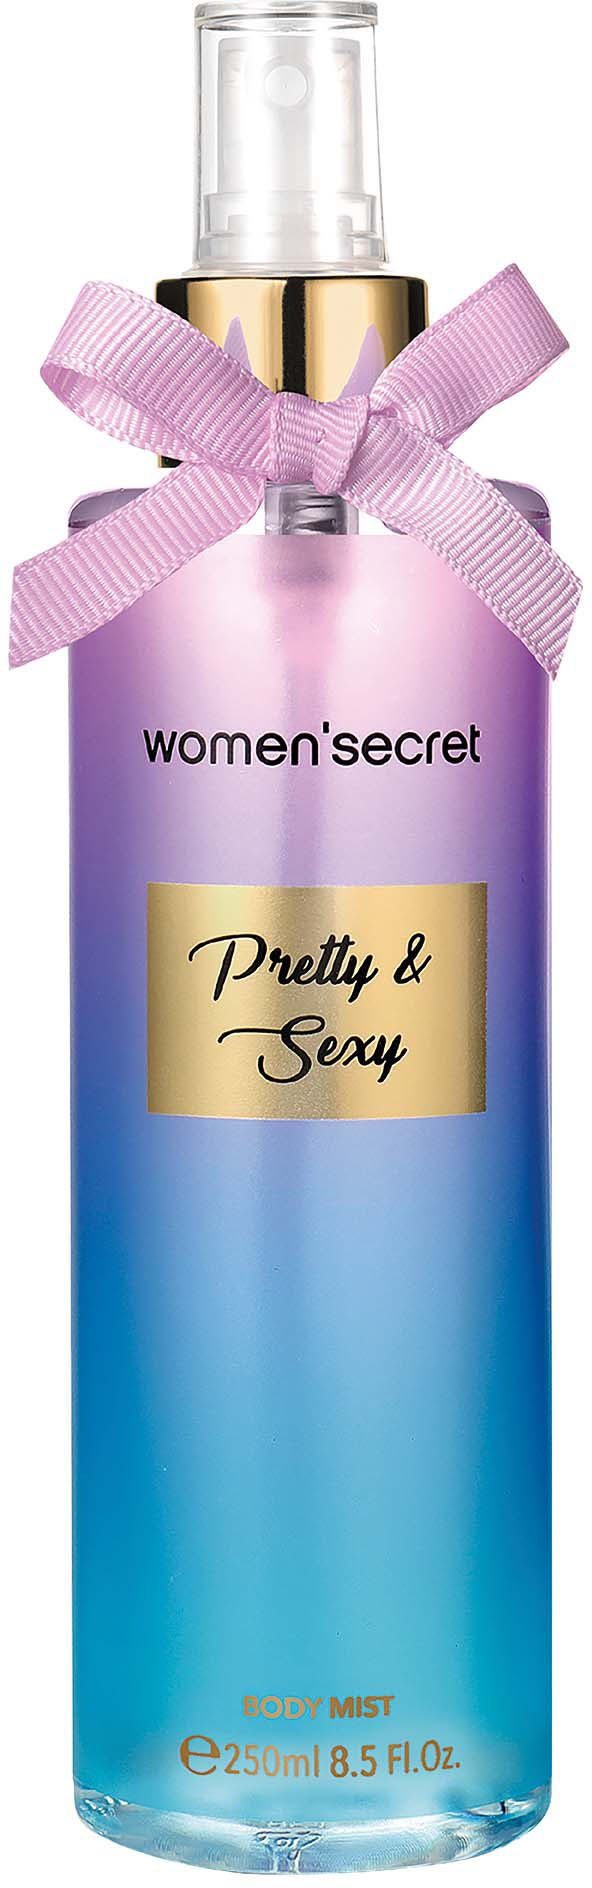 women'secret Körperspray Body & Sexy - Mist Pretty